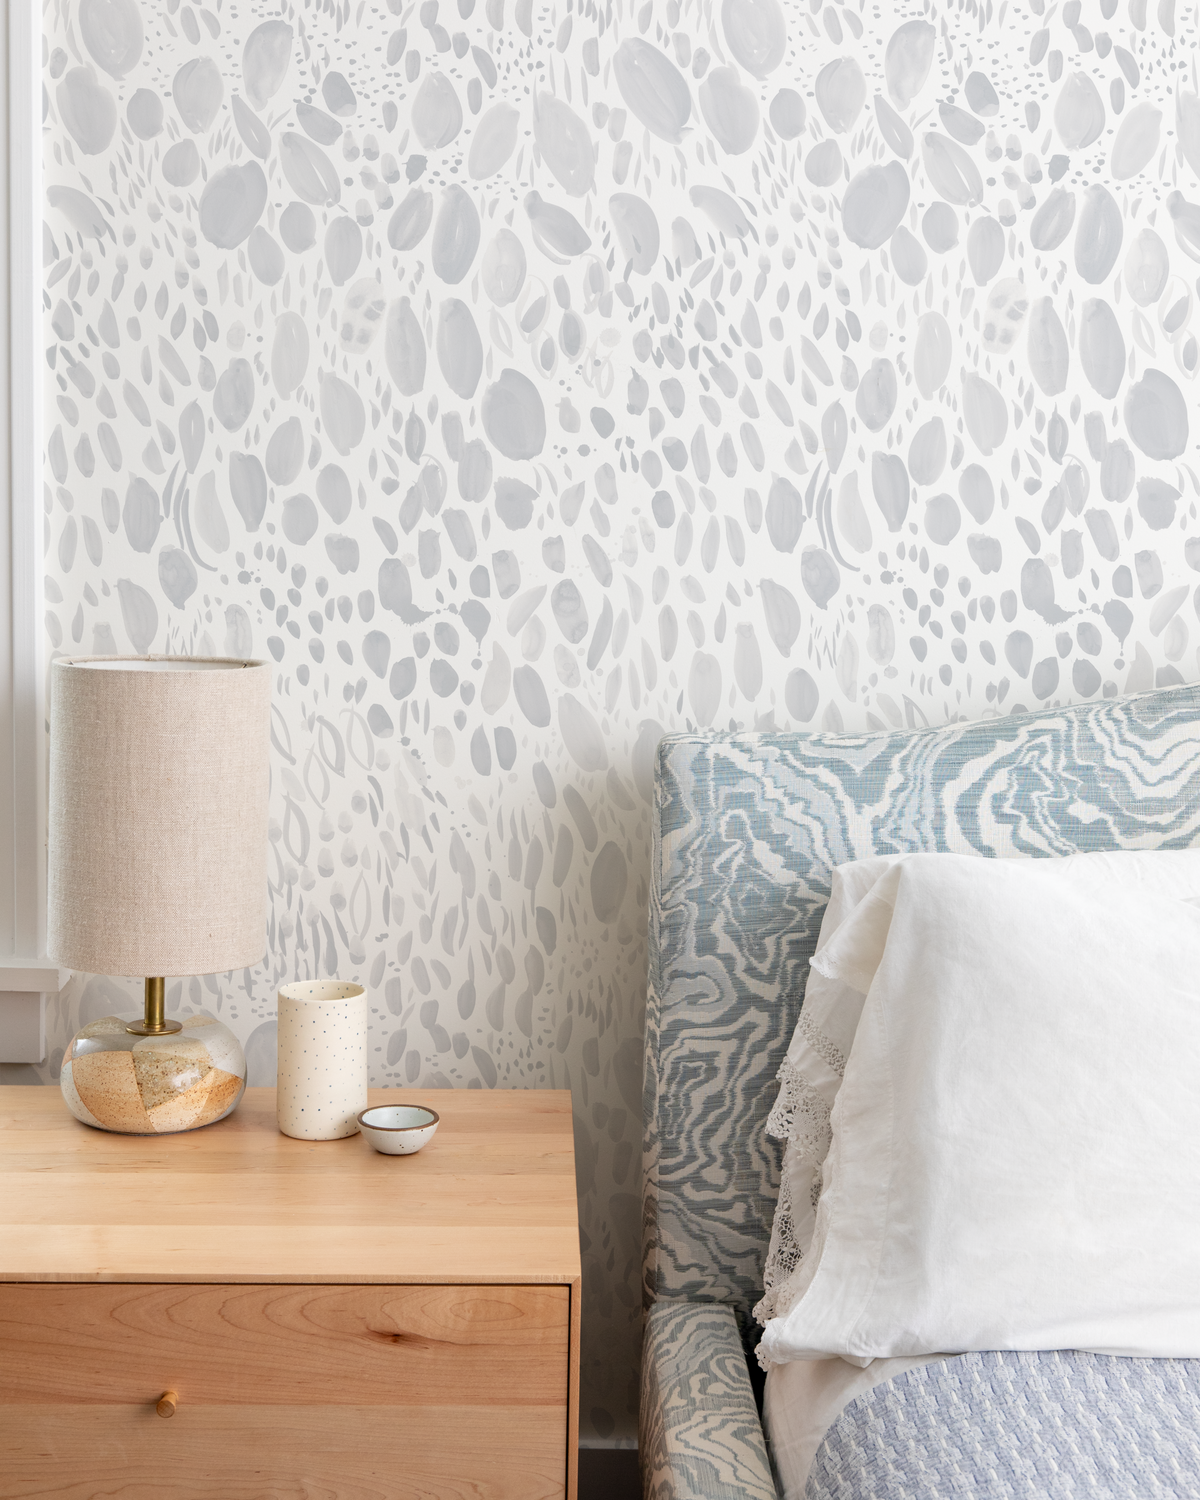 Blooms Wallpaper in Light Gray